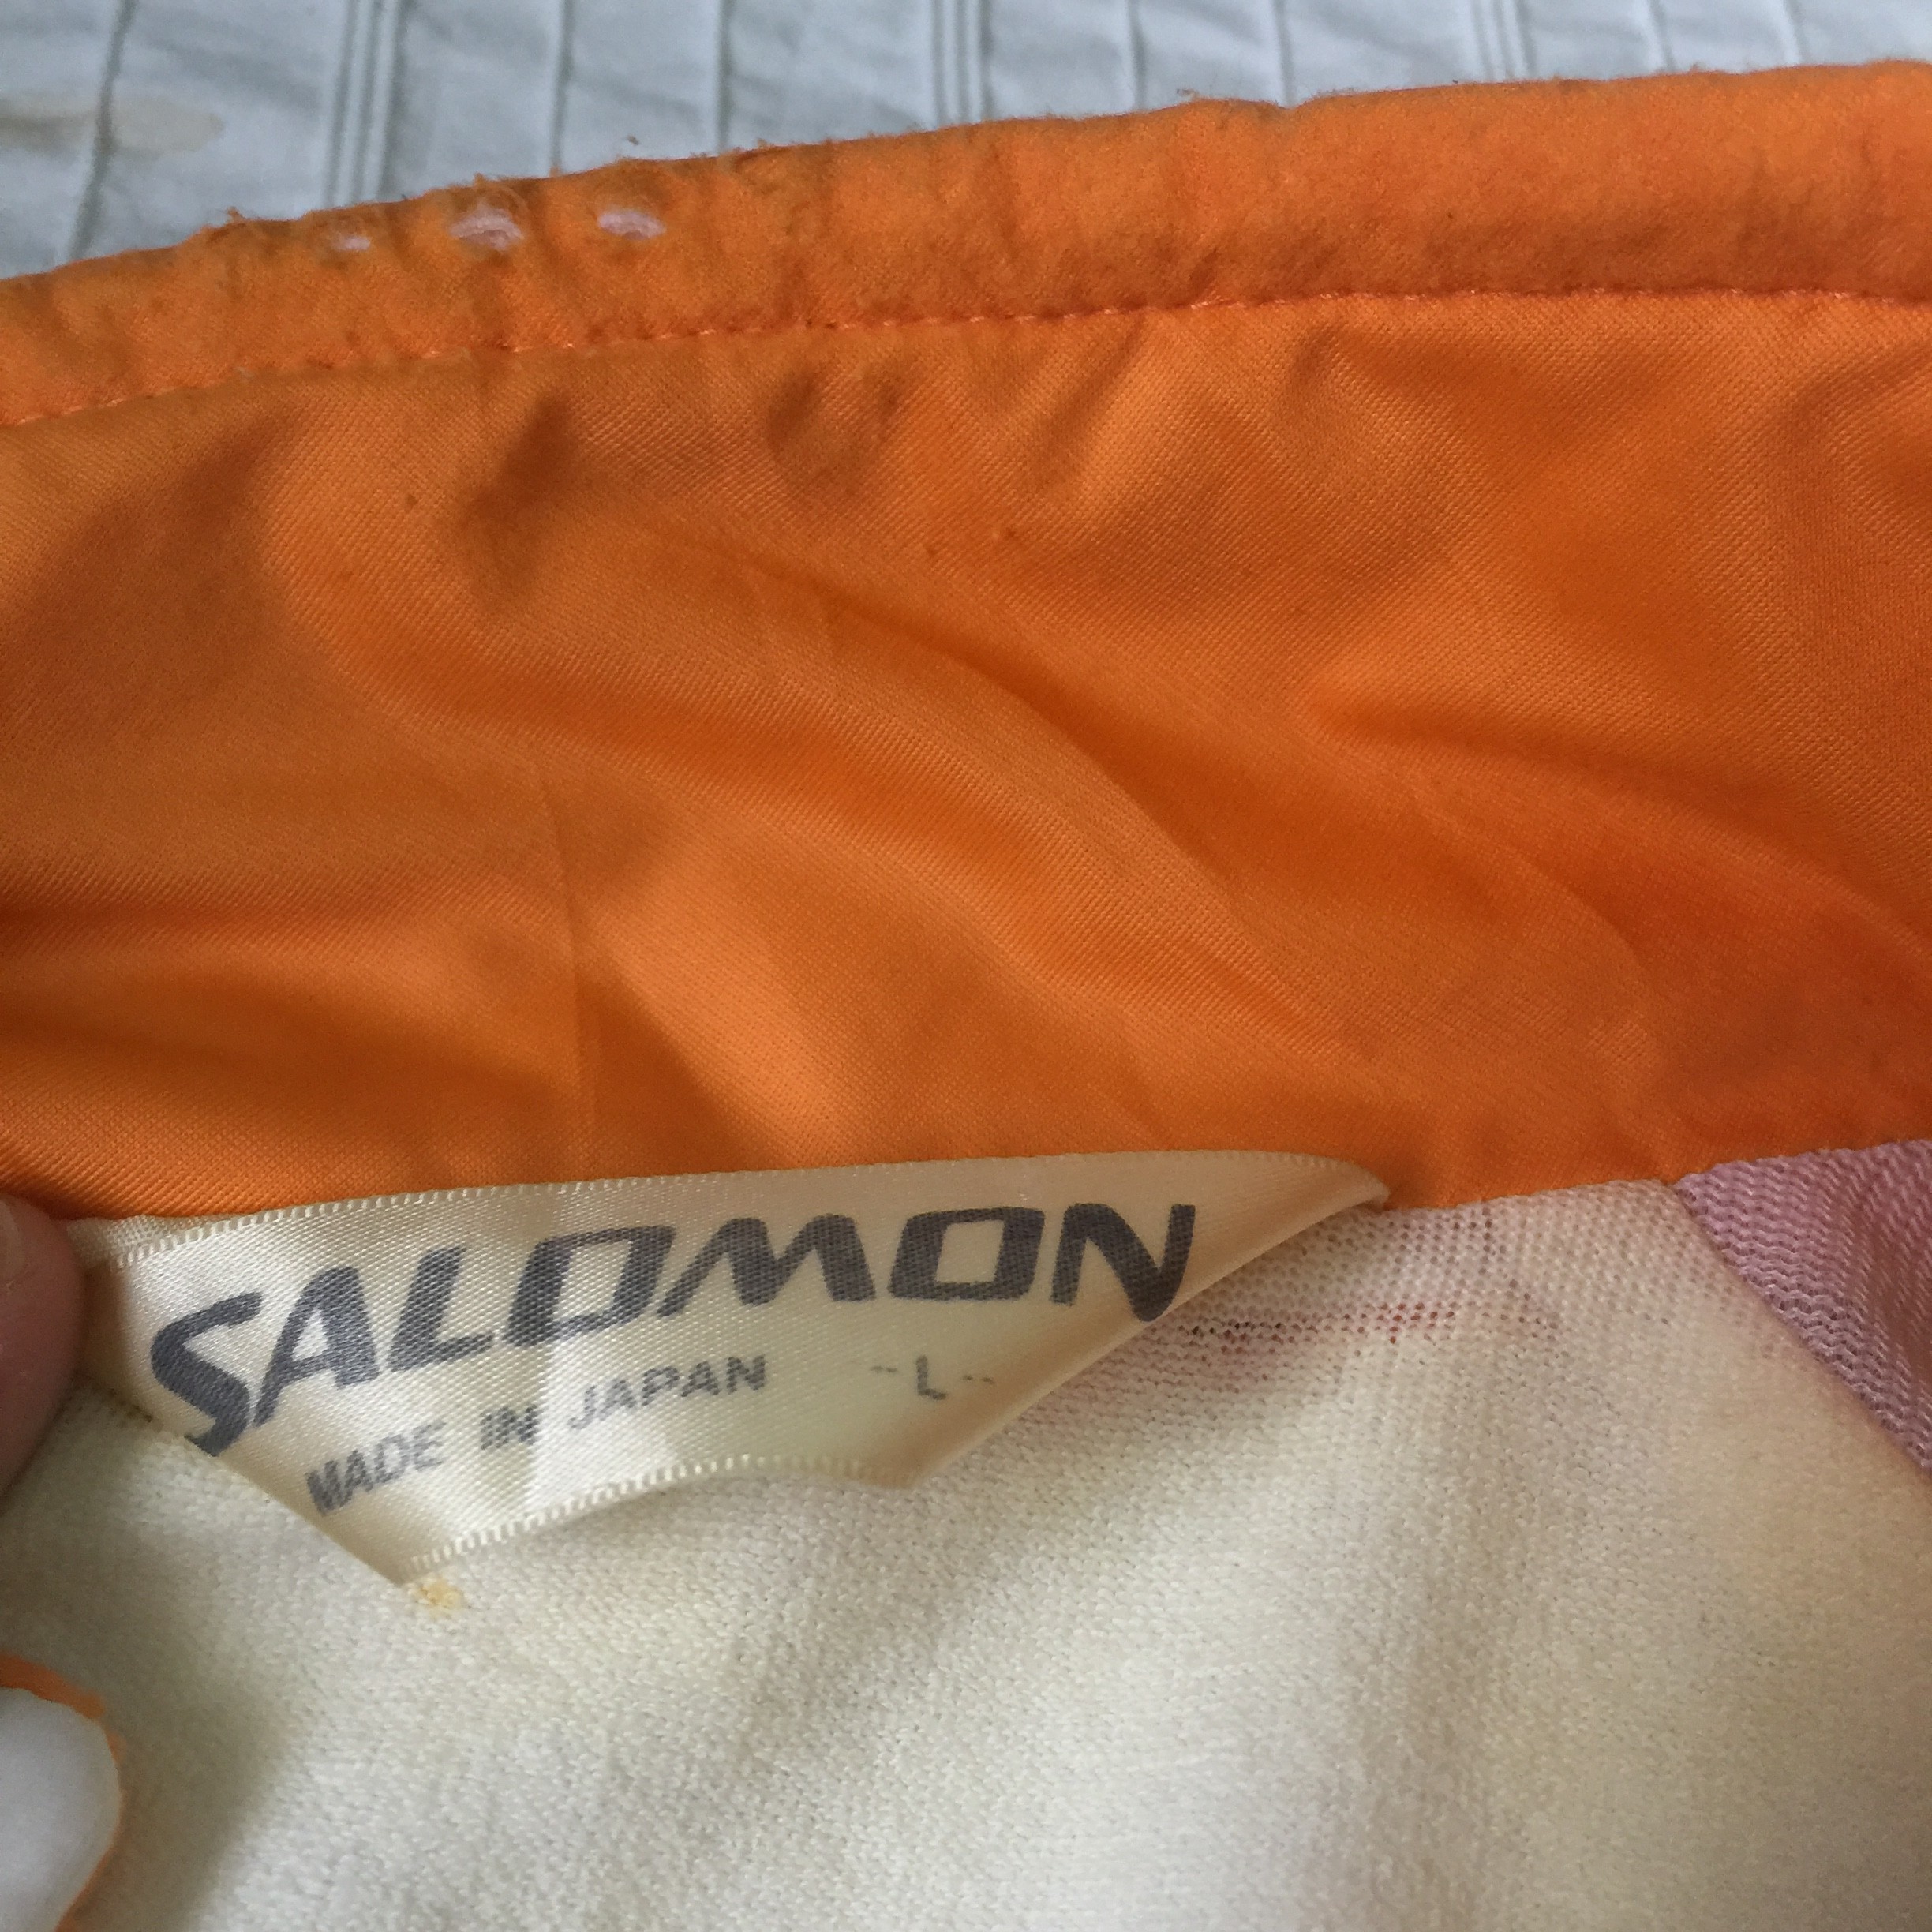 Salomon made in Japan - 9